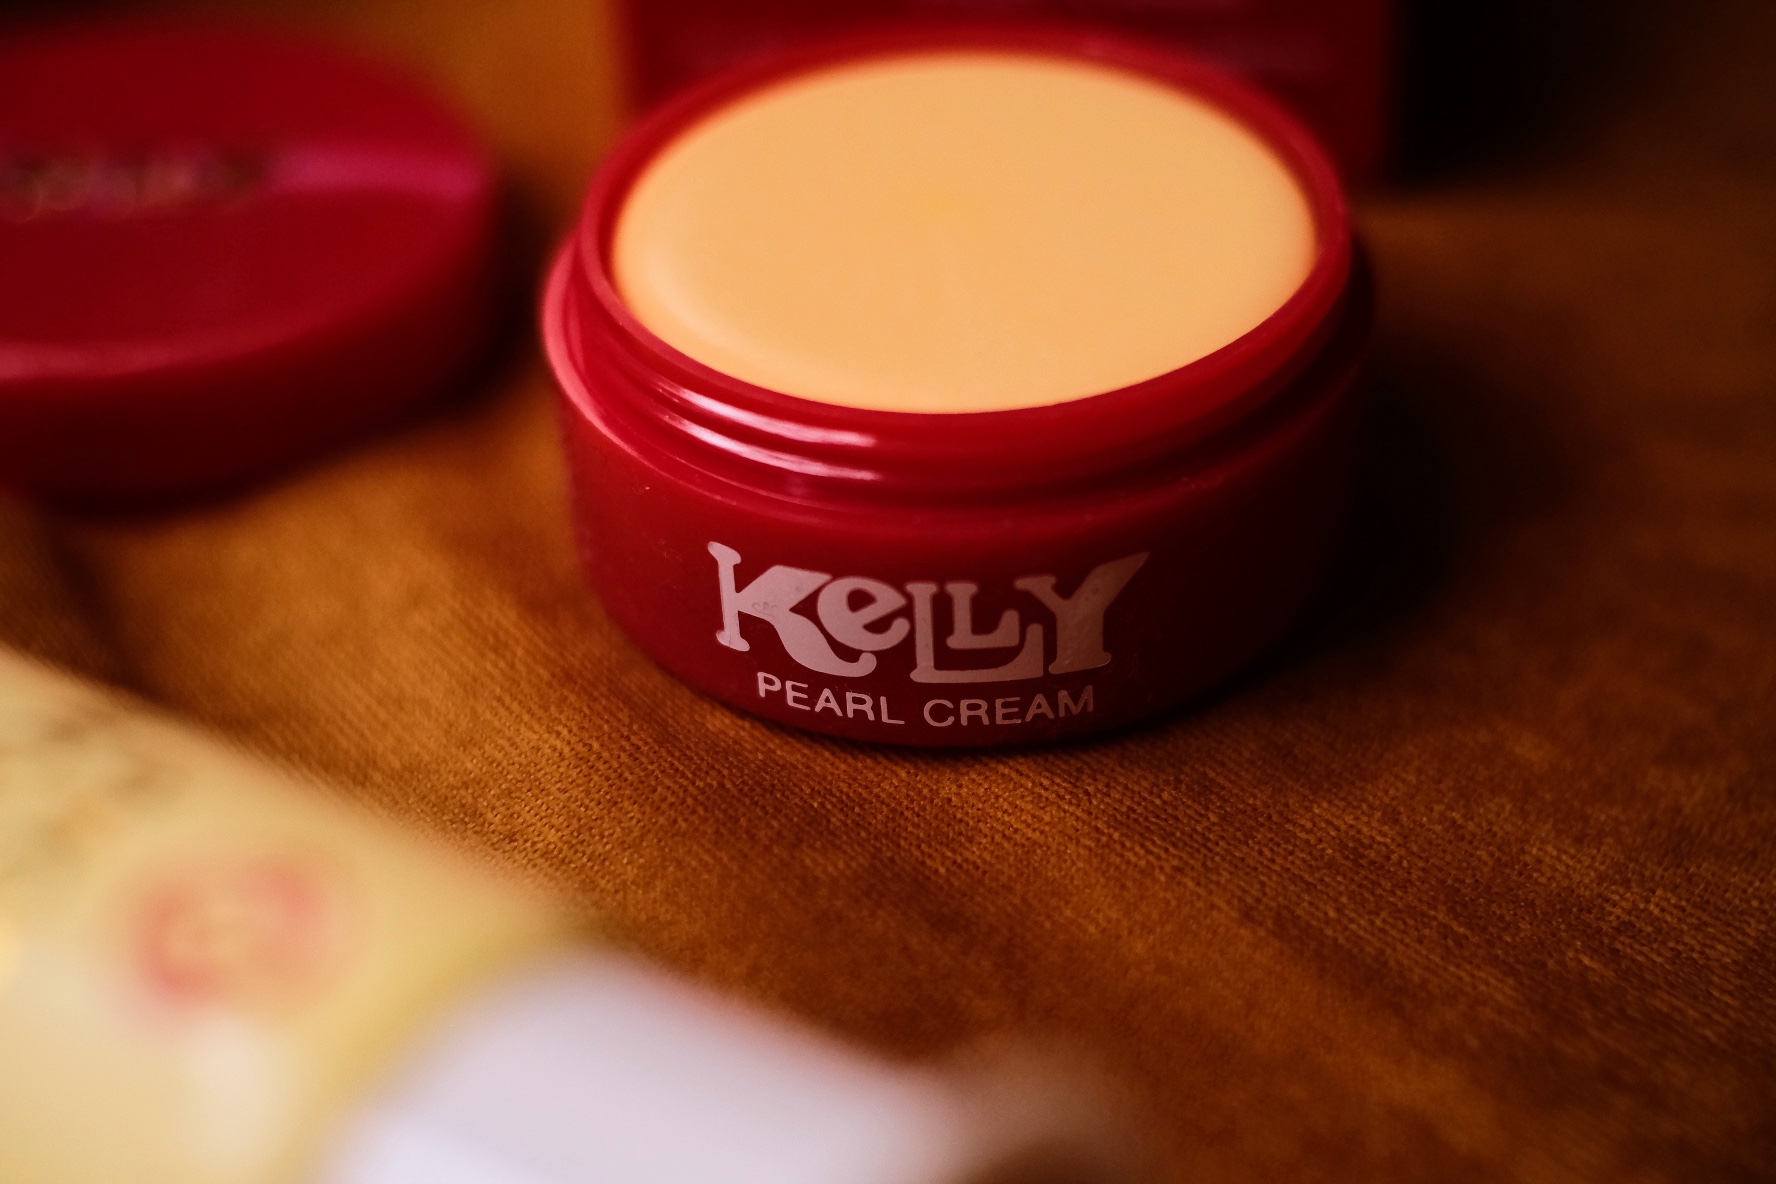 Kelly Pearl Cream